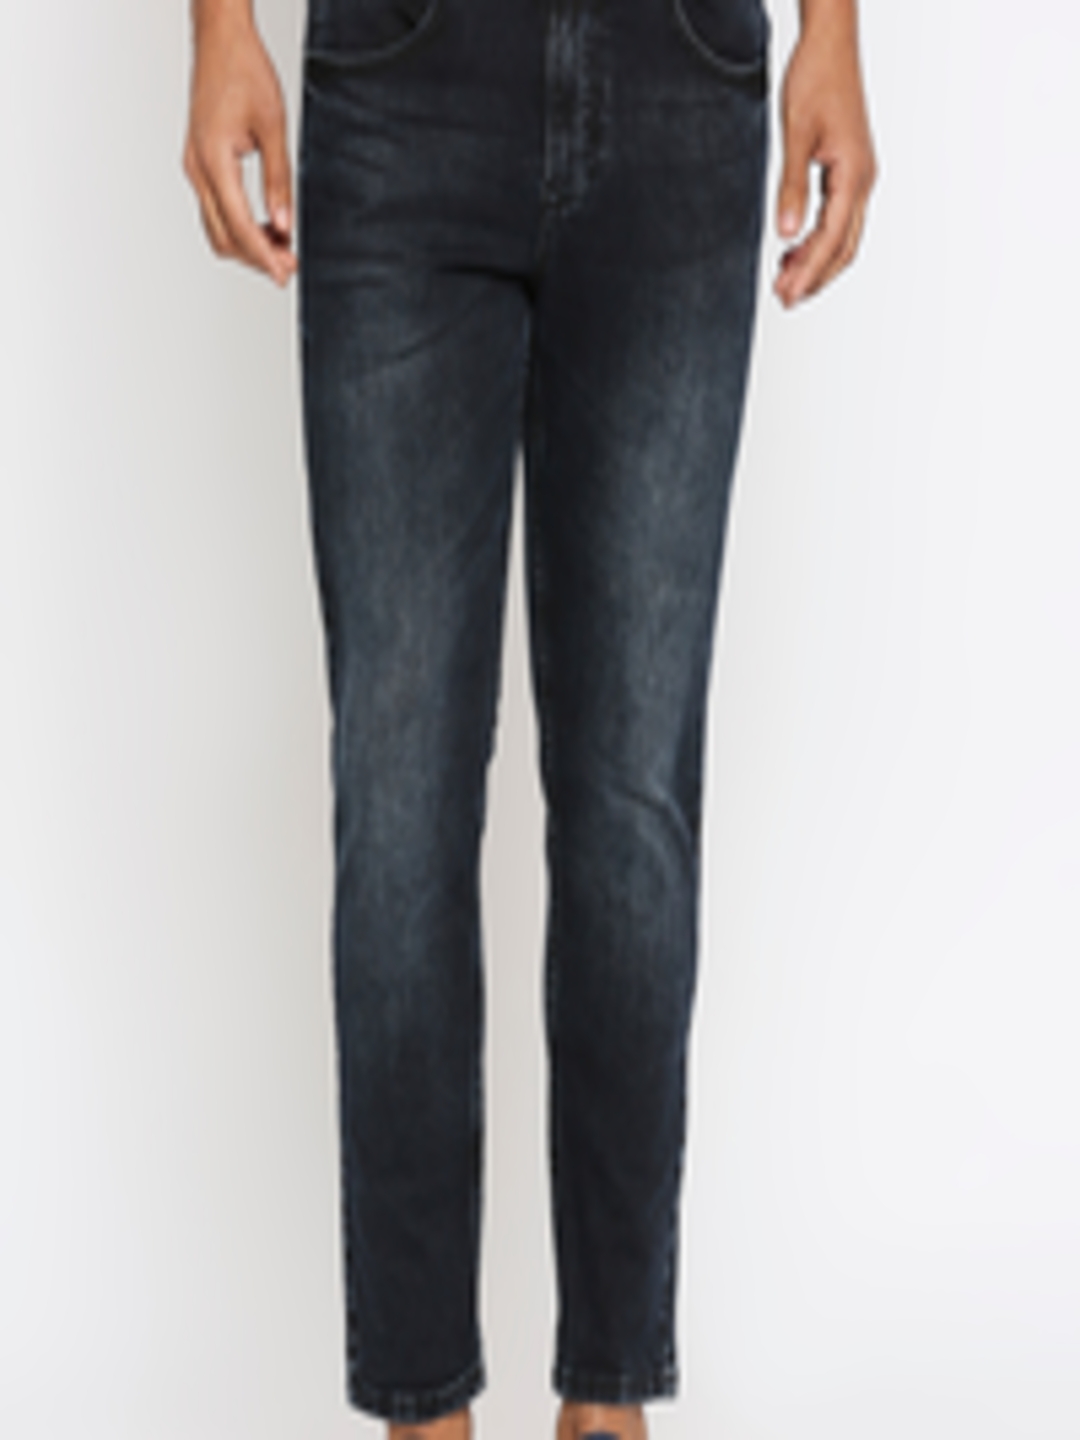 Buy Mufti Men Black Slim Fit Light Fade Jeans - Jeans for Men 15041554 ...